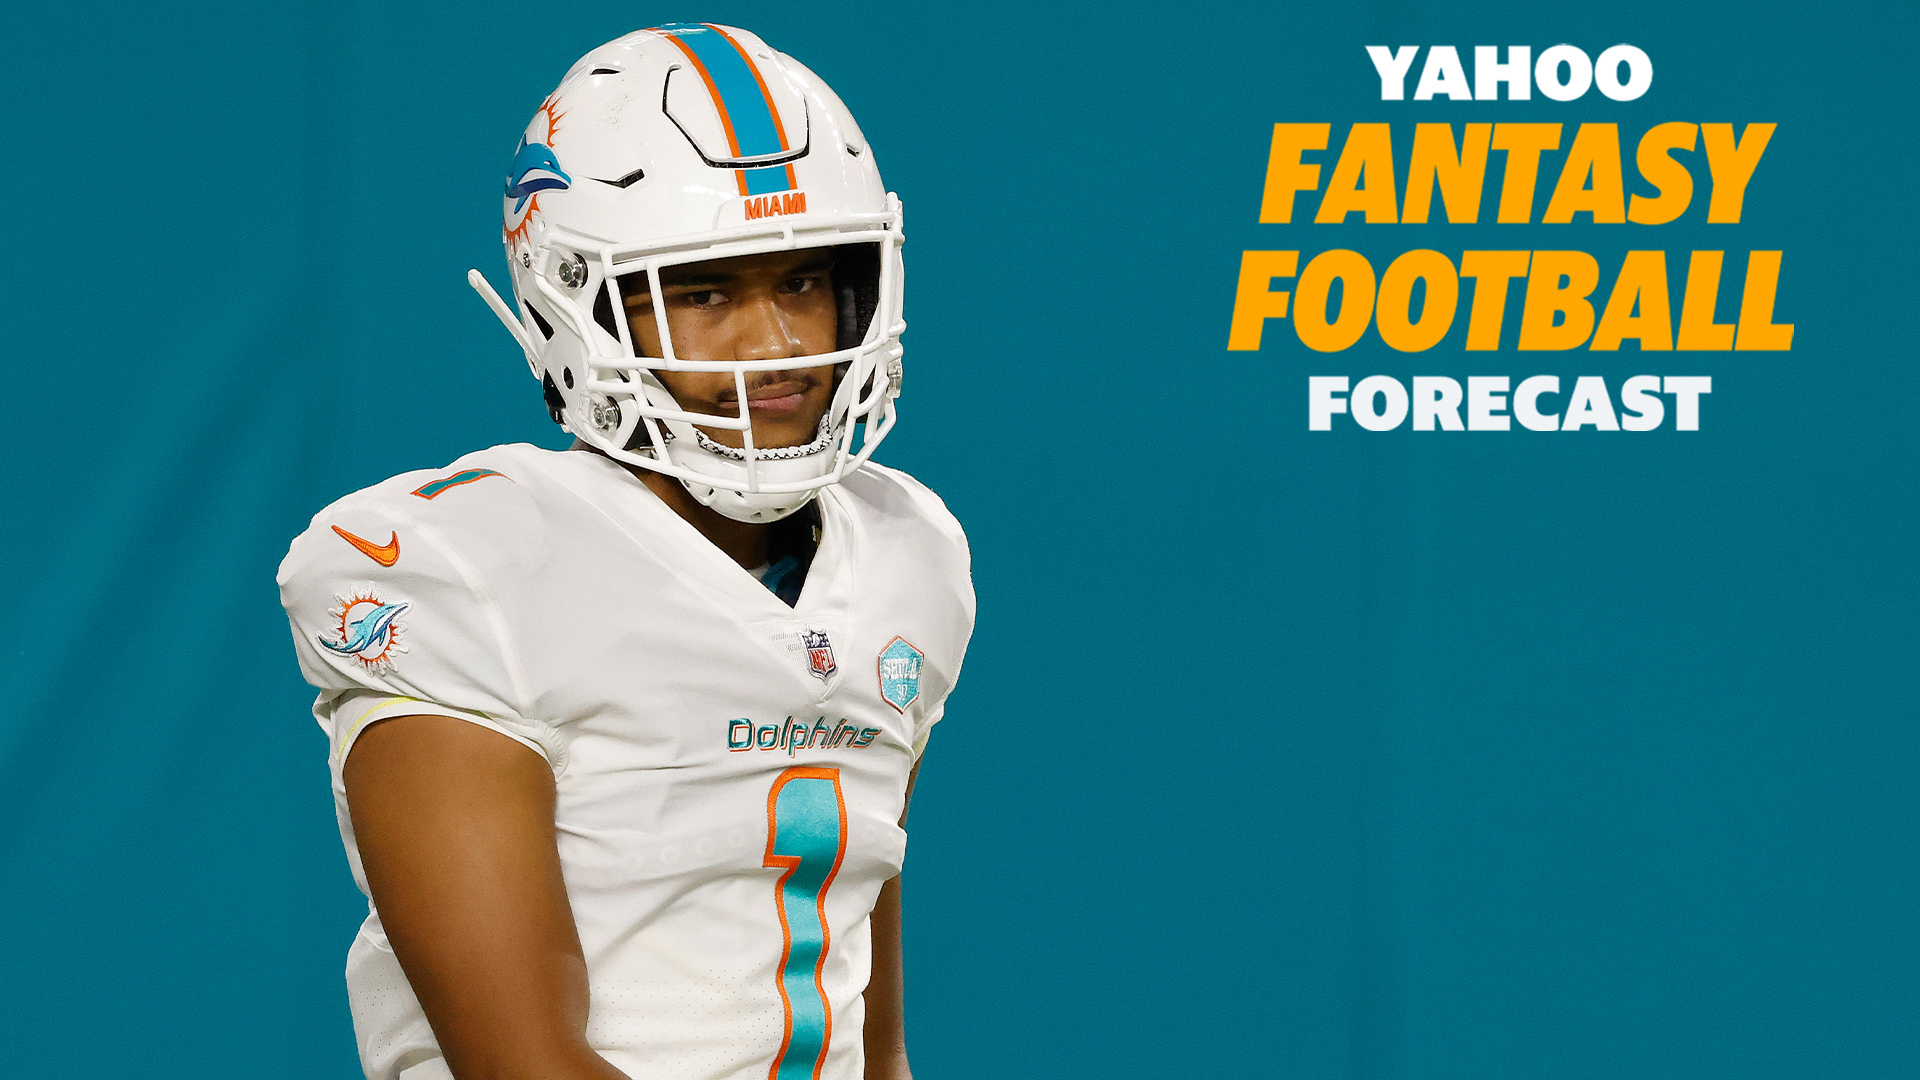 Yahoo Fantasy Football Forecast Week 8 preview